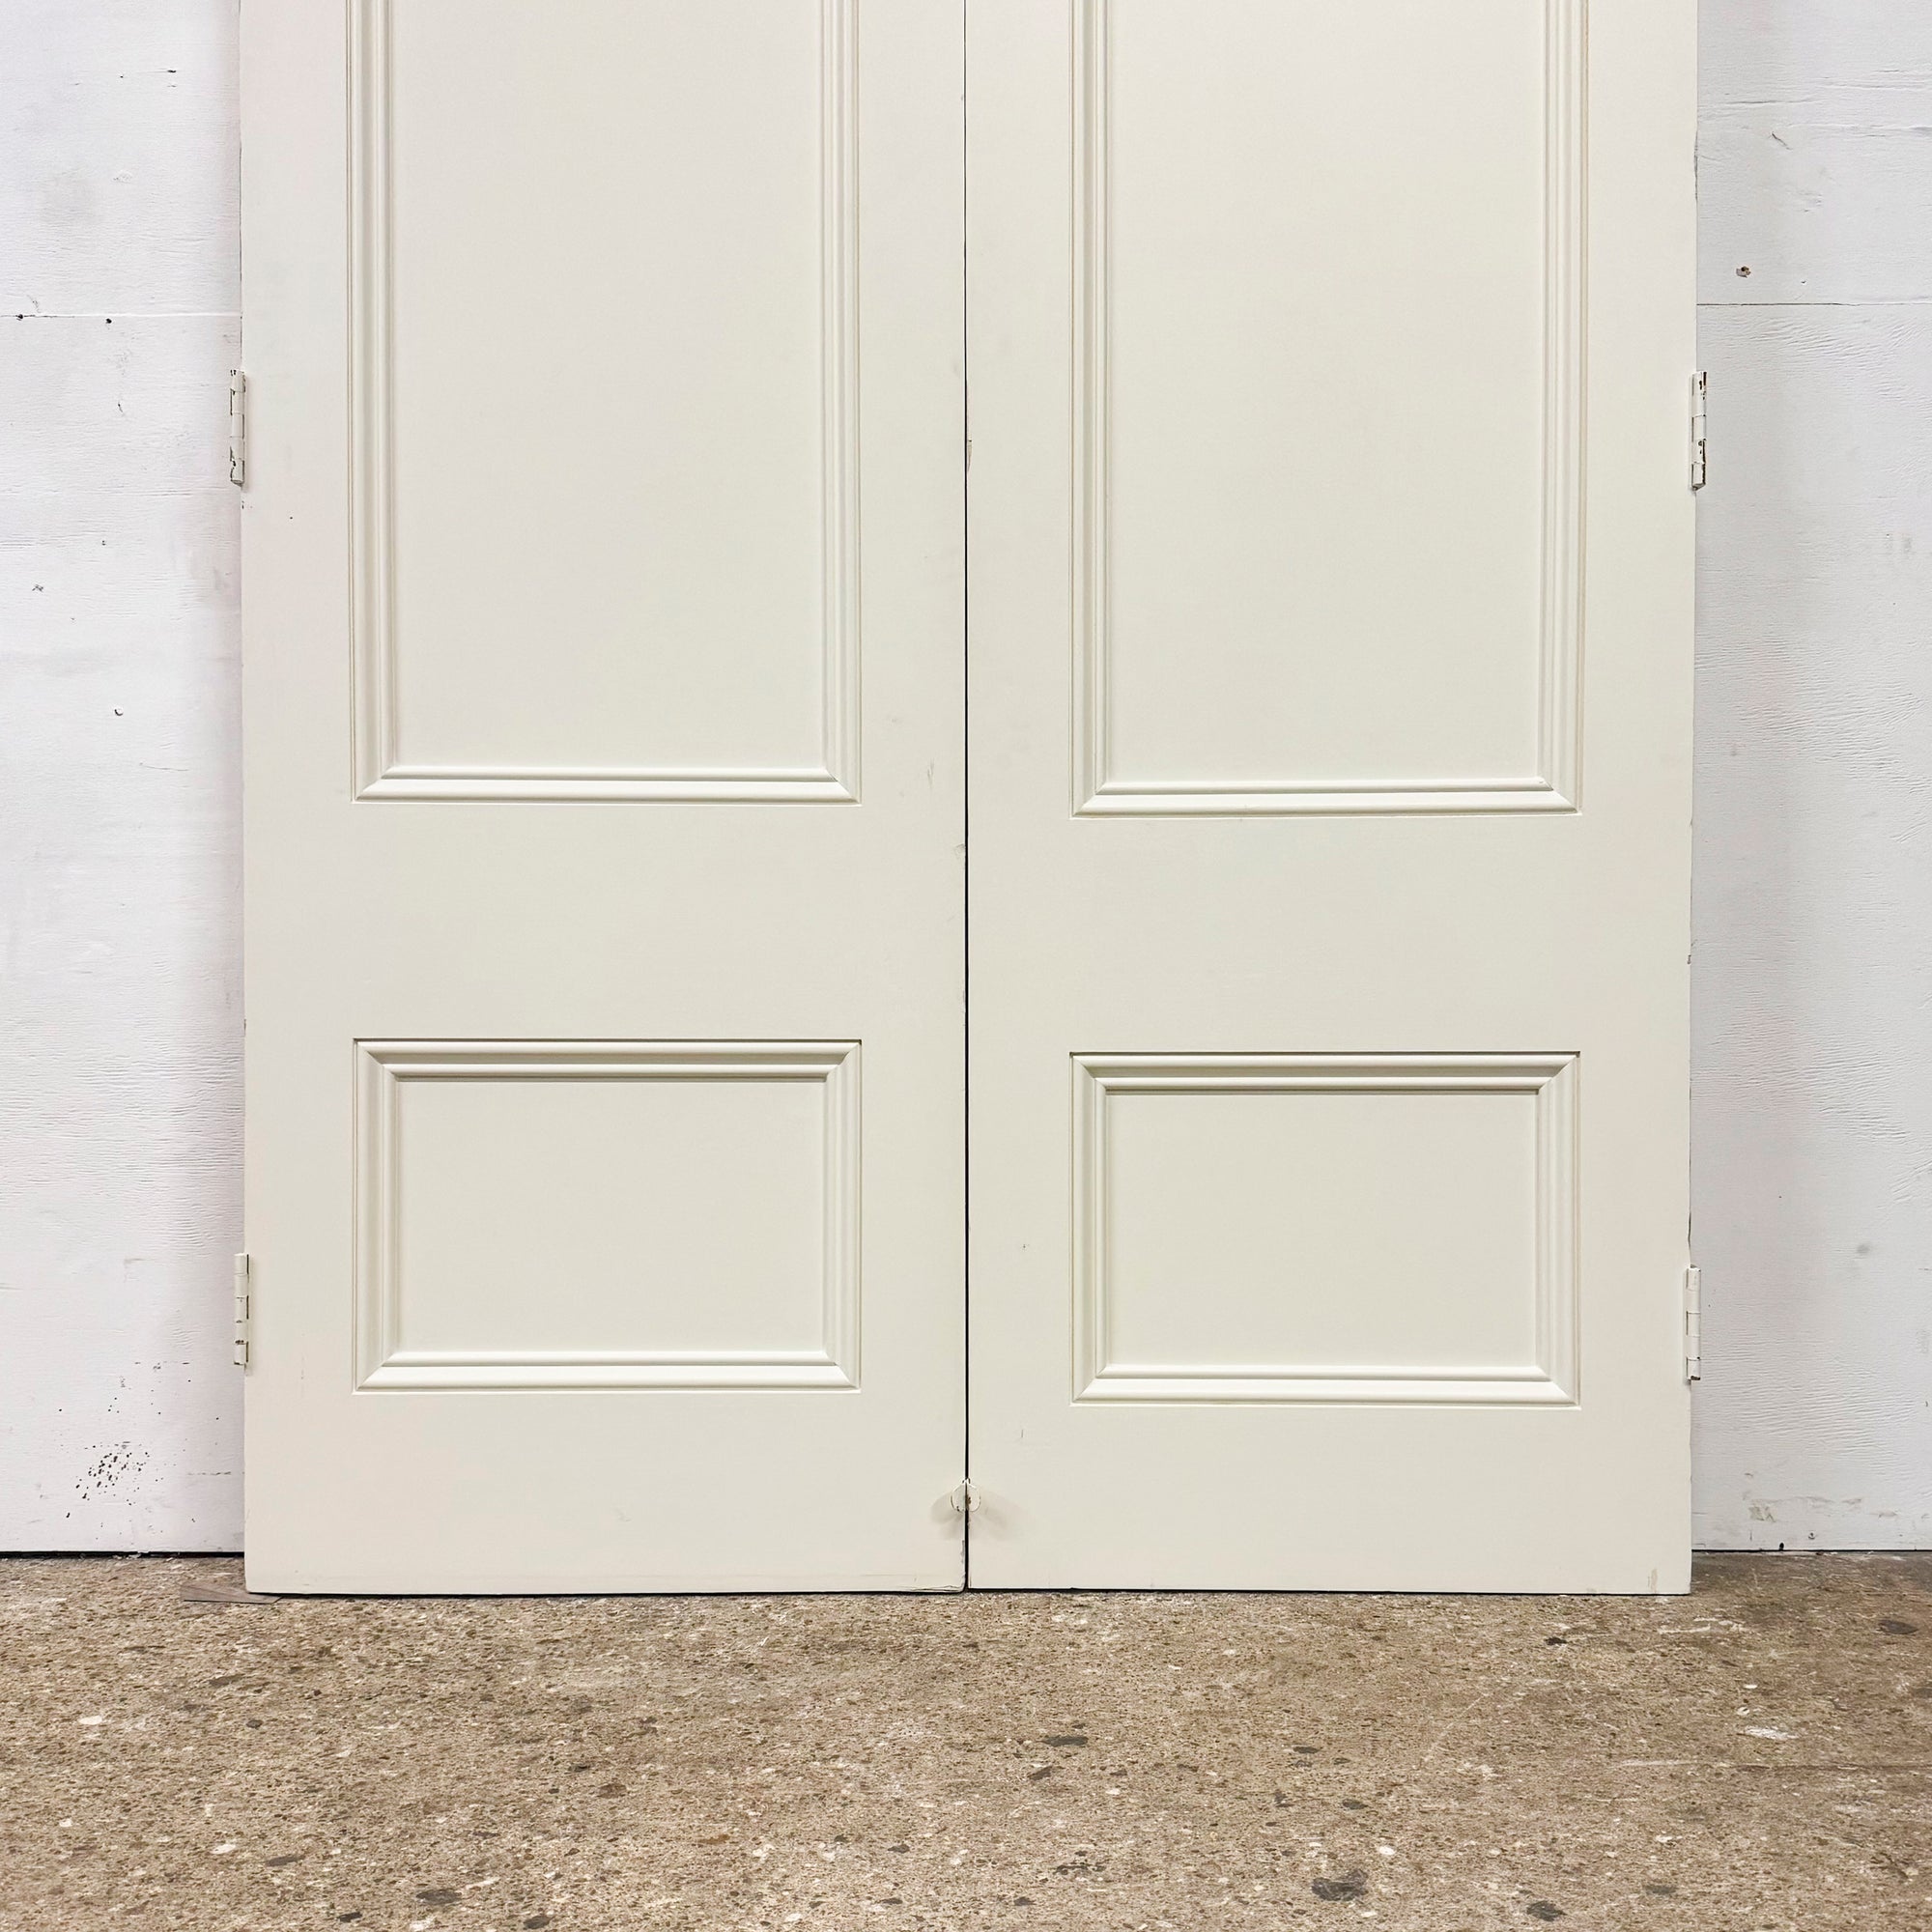 Reclaimed Tulip Wood Double Doors 211cm x 135cm | The Architectural Forum